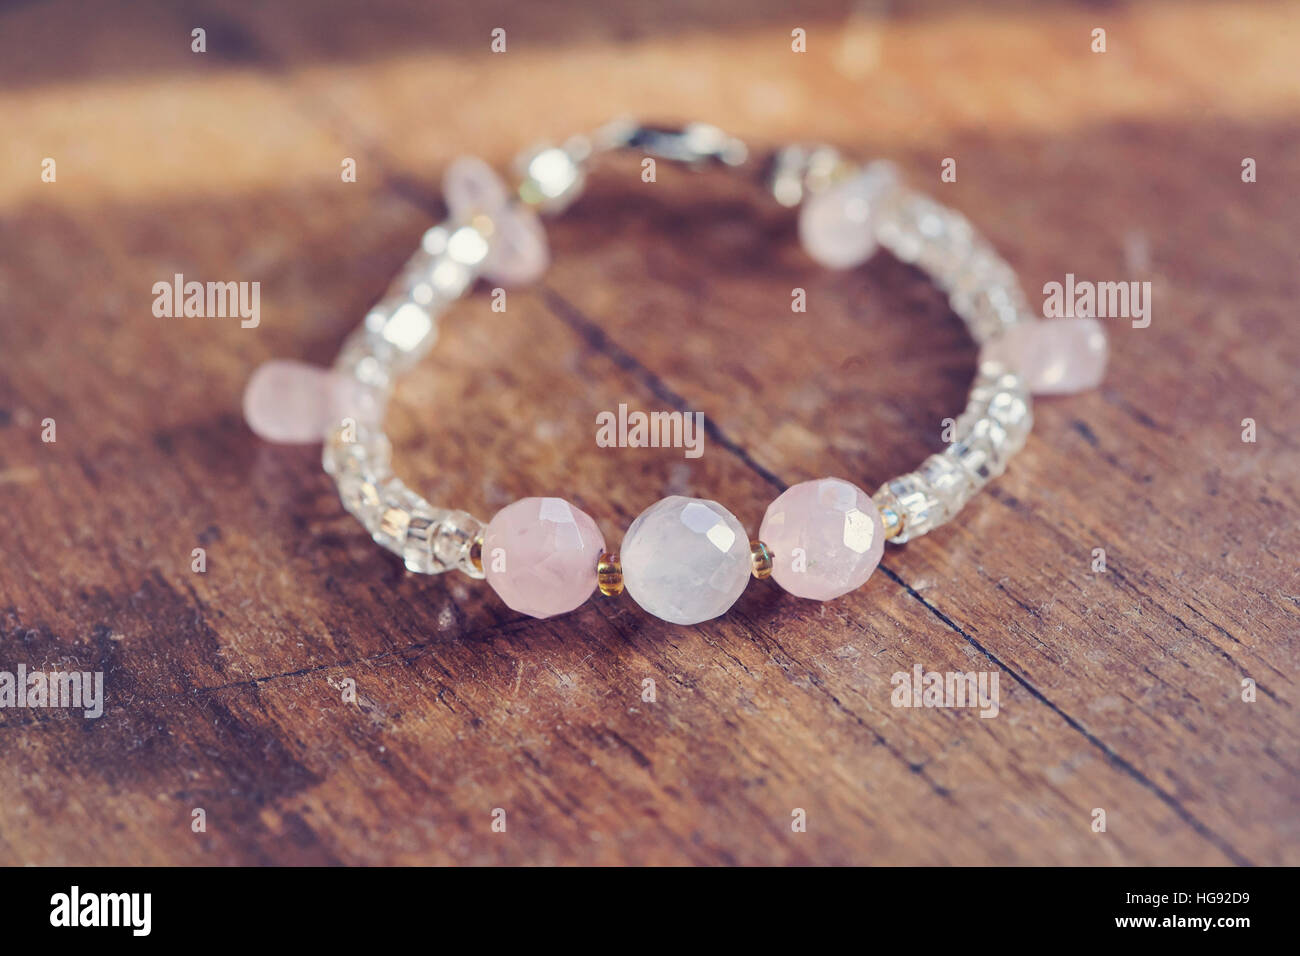 Beautiful rose quartz bracelet on wooden table Stock Photo